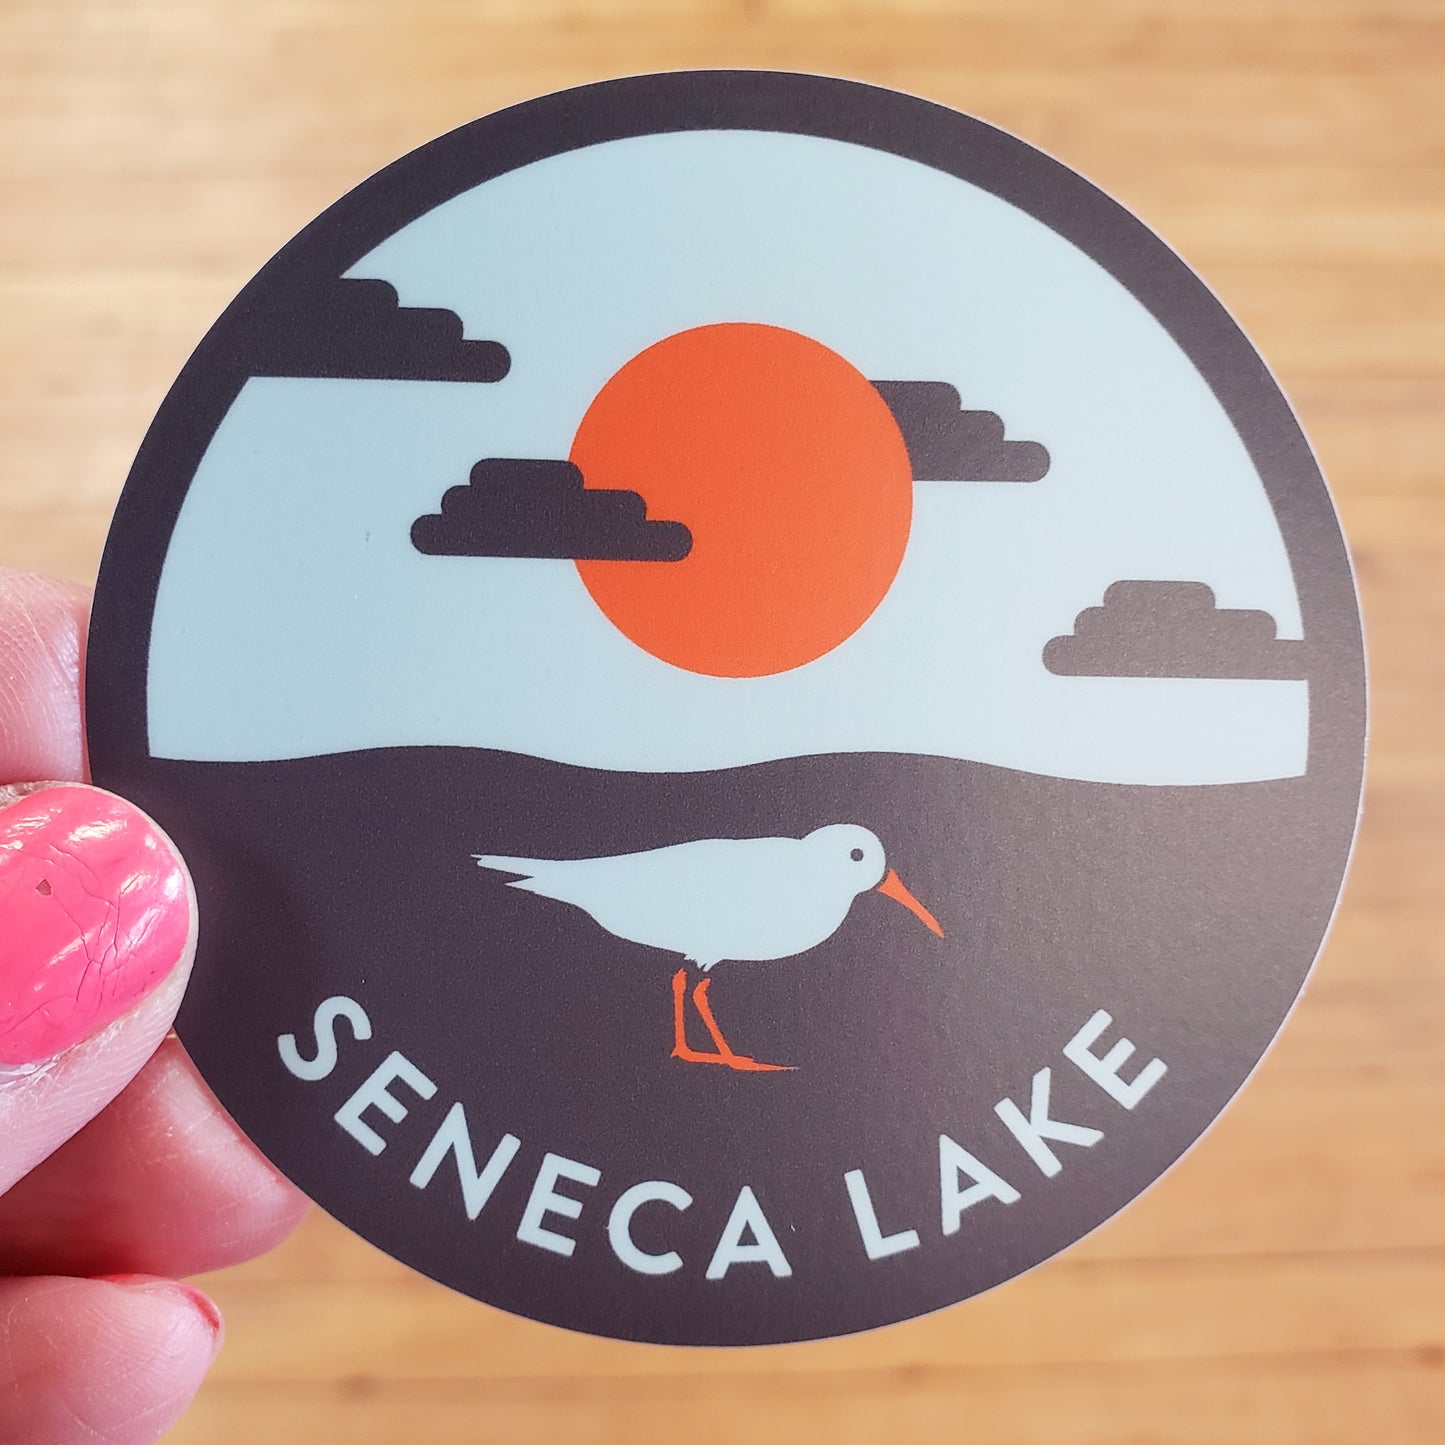 Seneca Lake Seagull Sticker